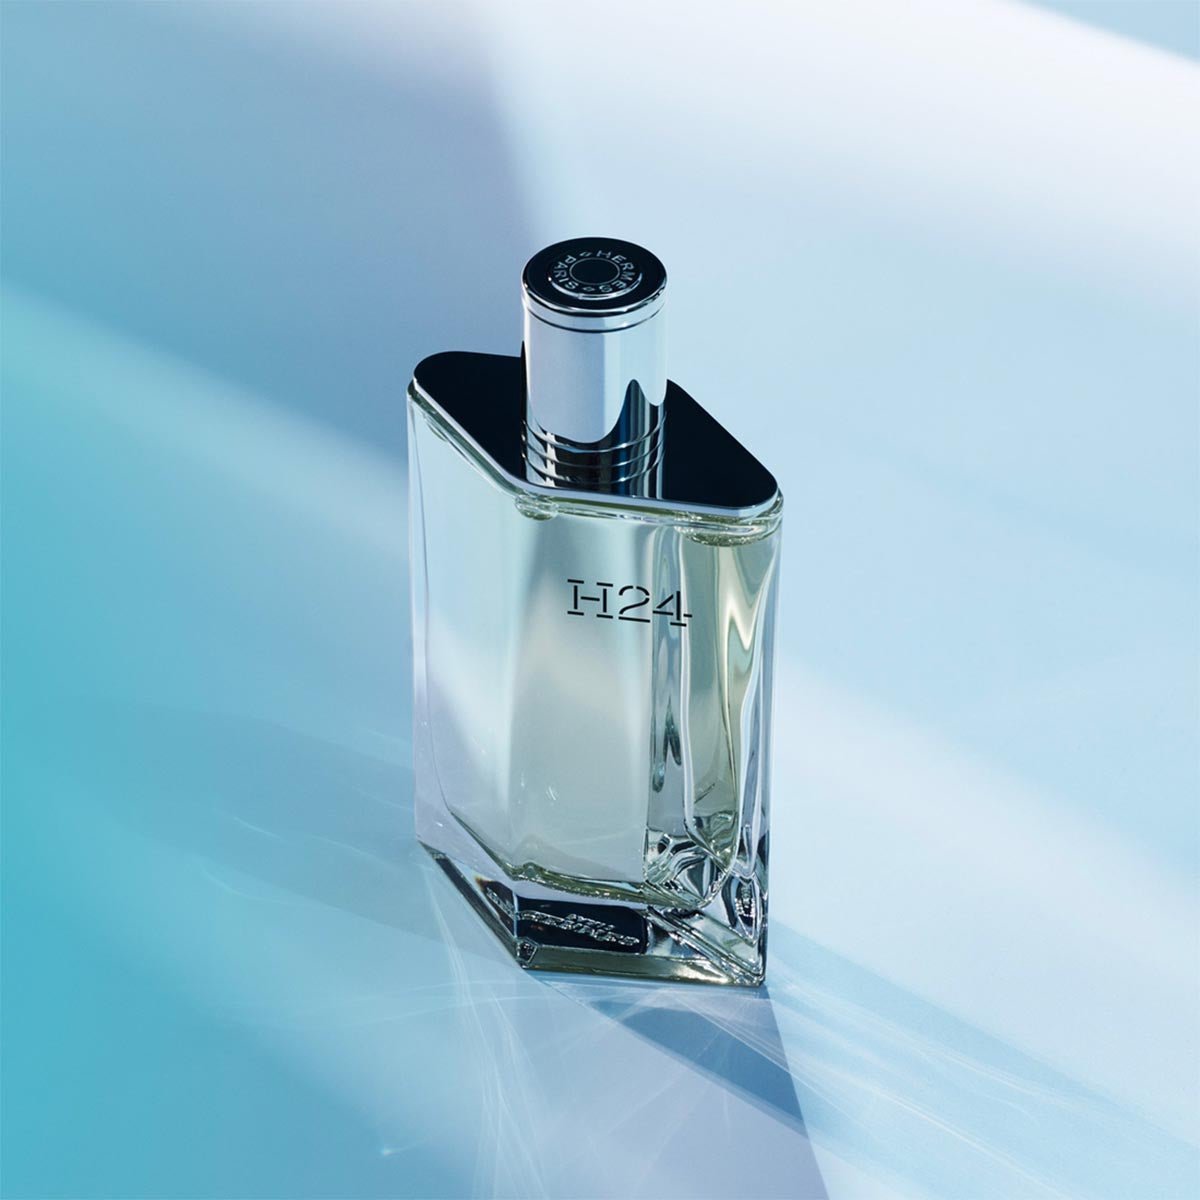 HERMÈS H24 EDT Travel Set For Men | My Perfume Shop Australia